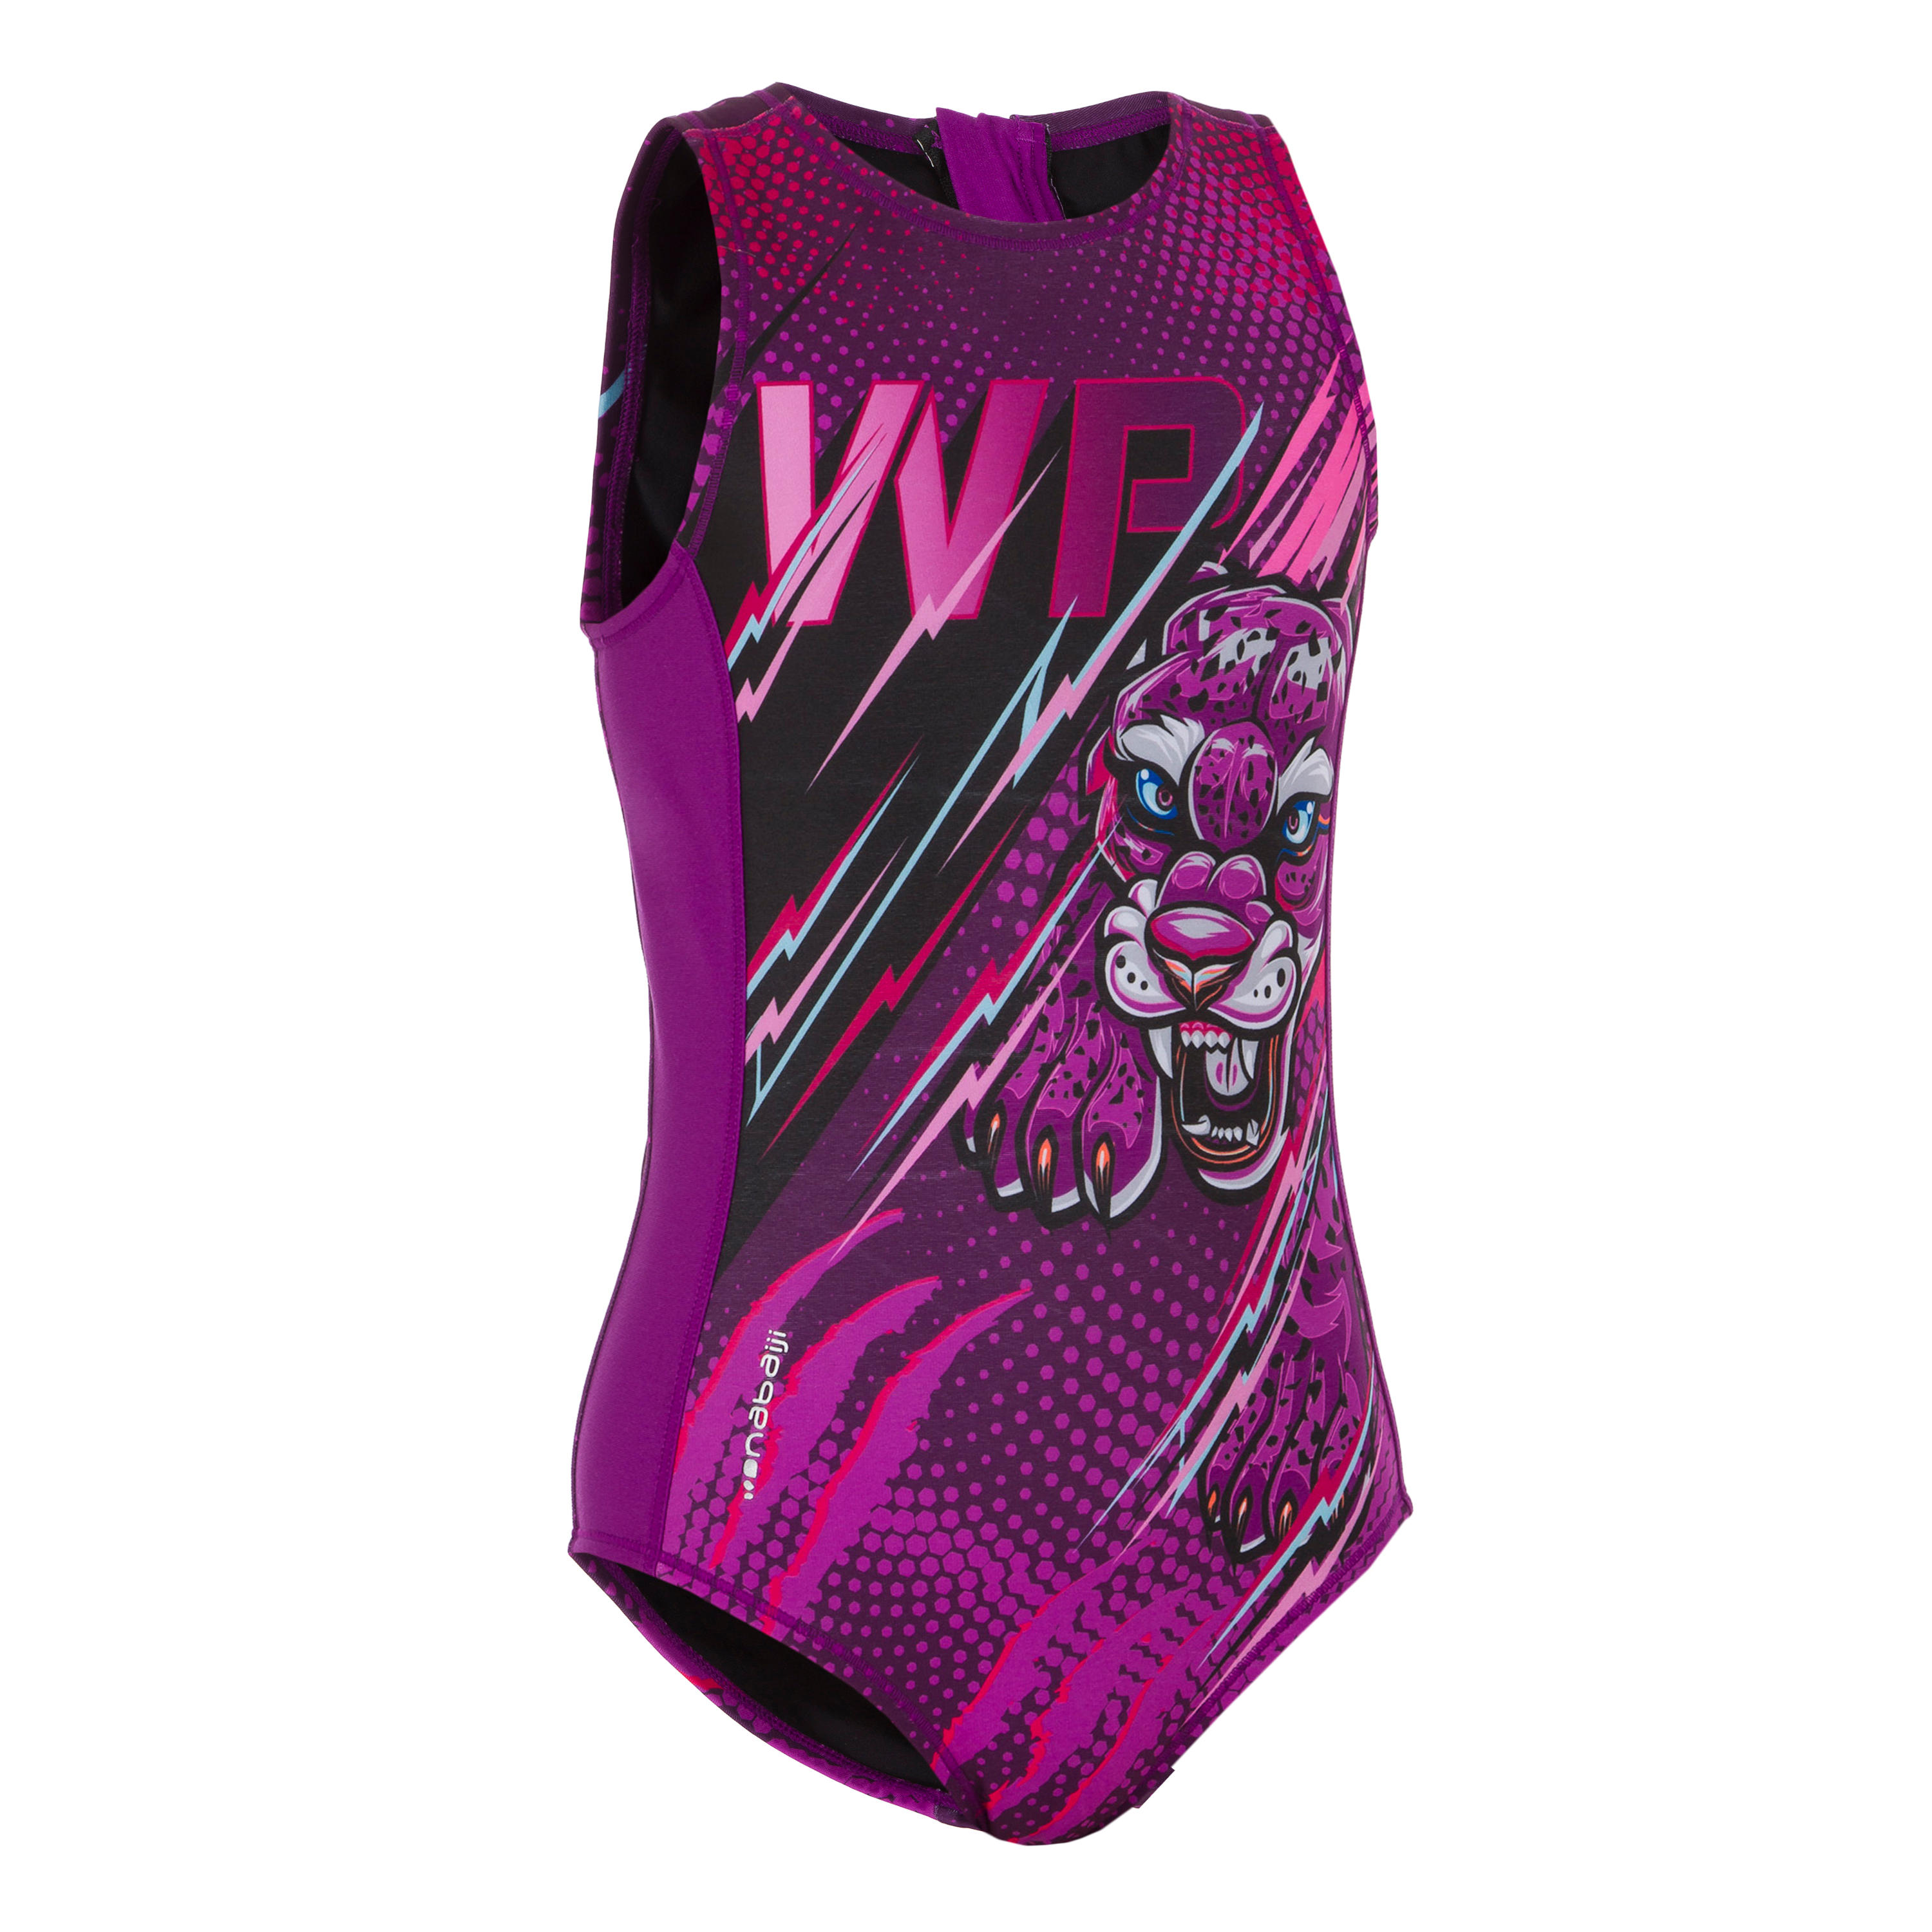 WATKO Girls' Water Polo One-Piece Swimsuit 500 - Panther Purple